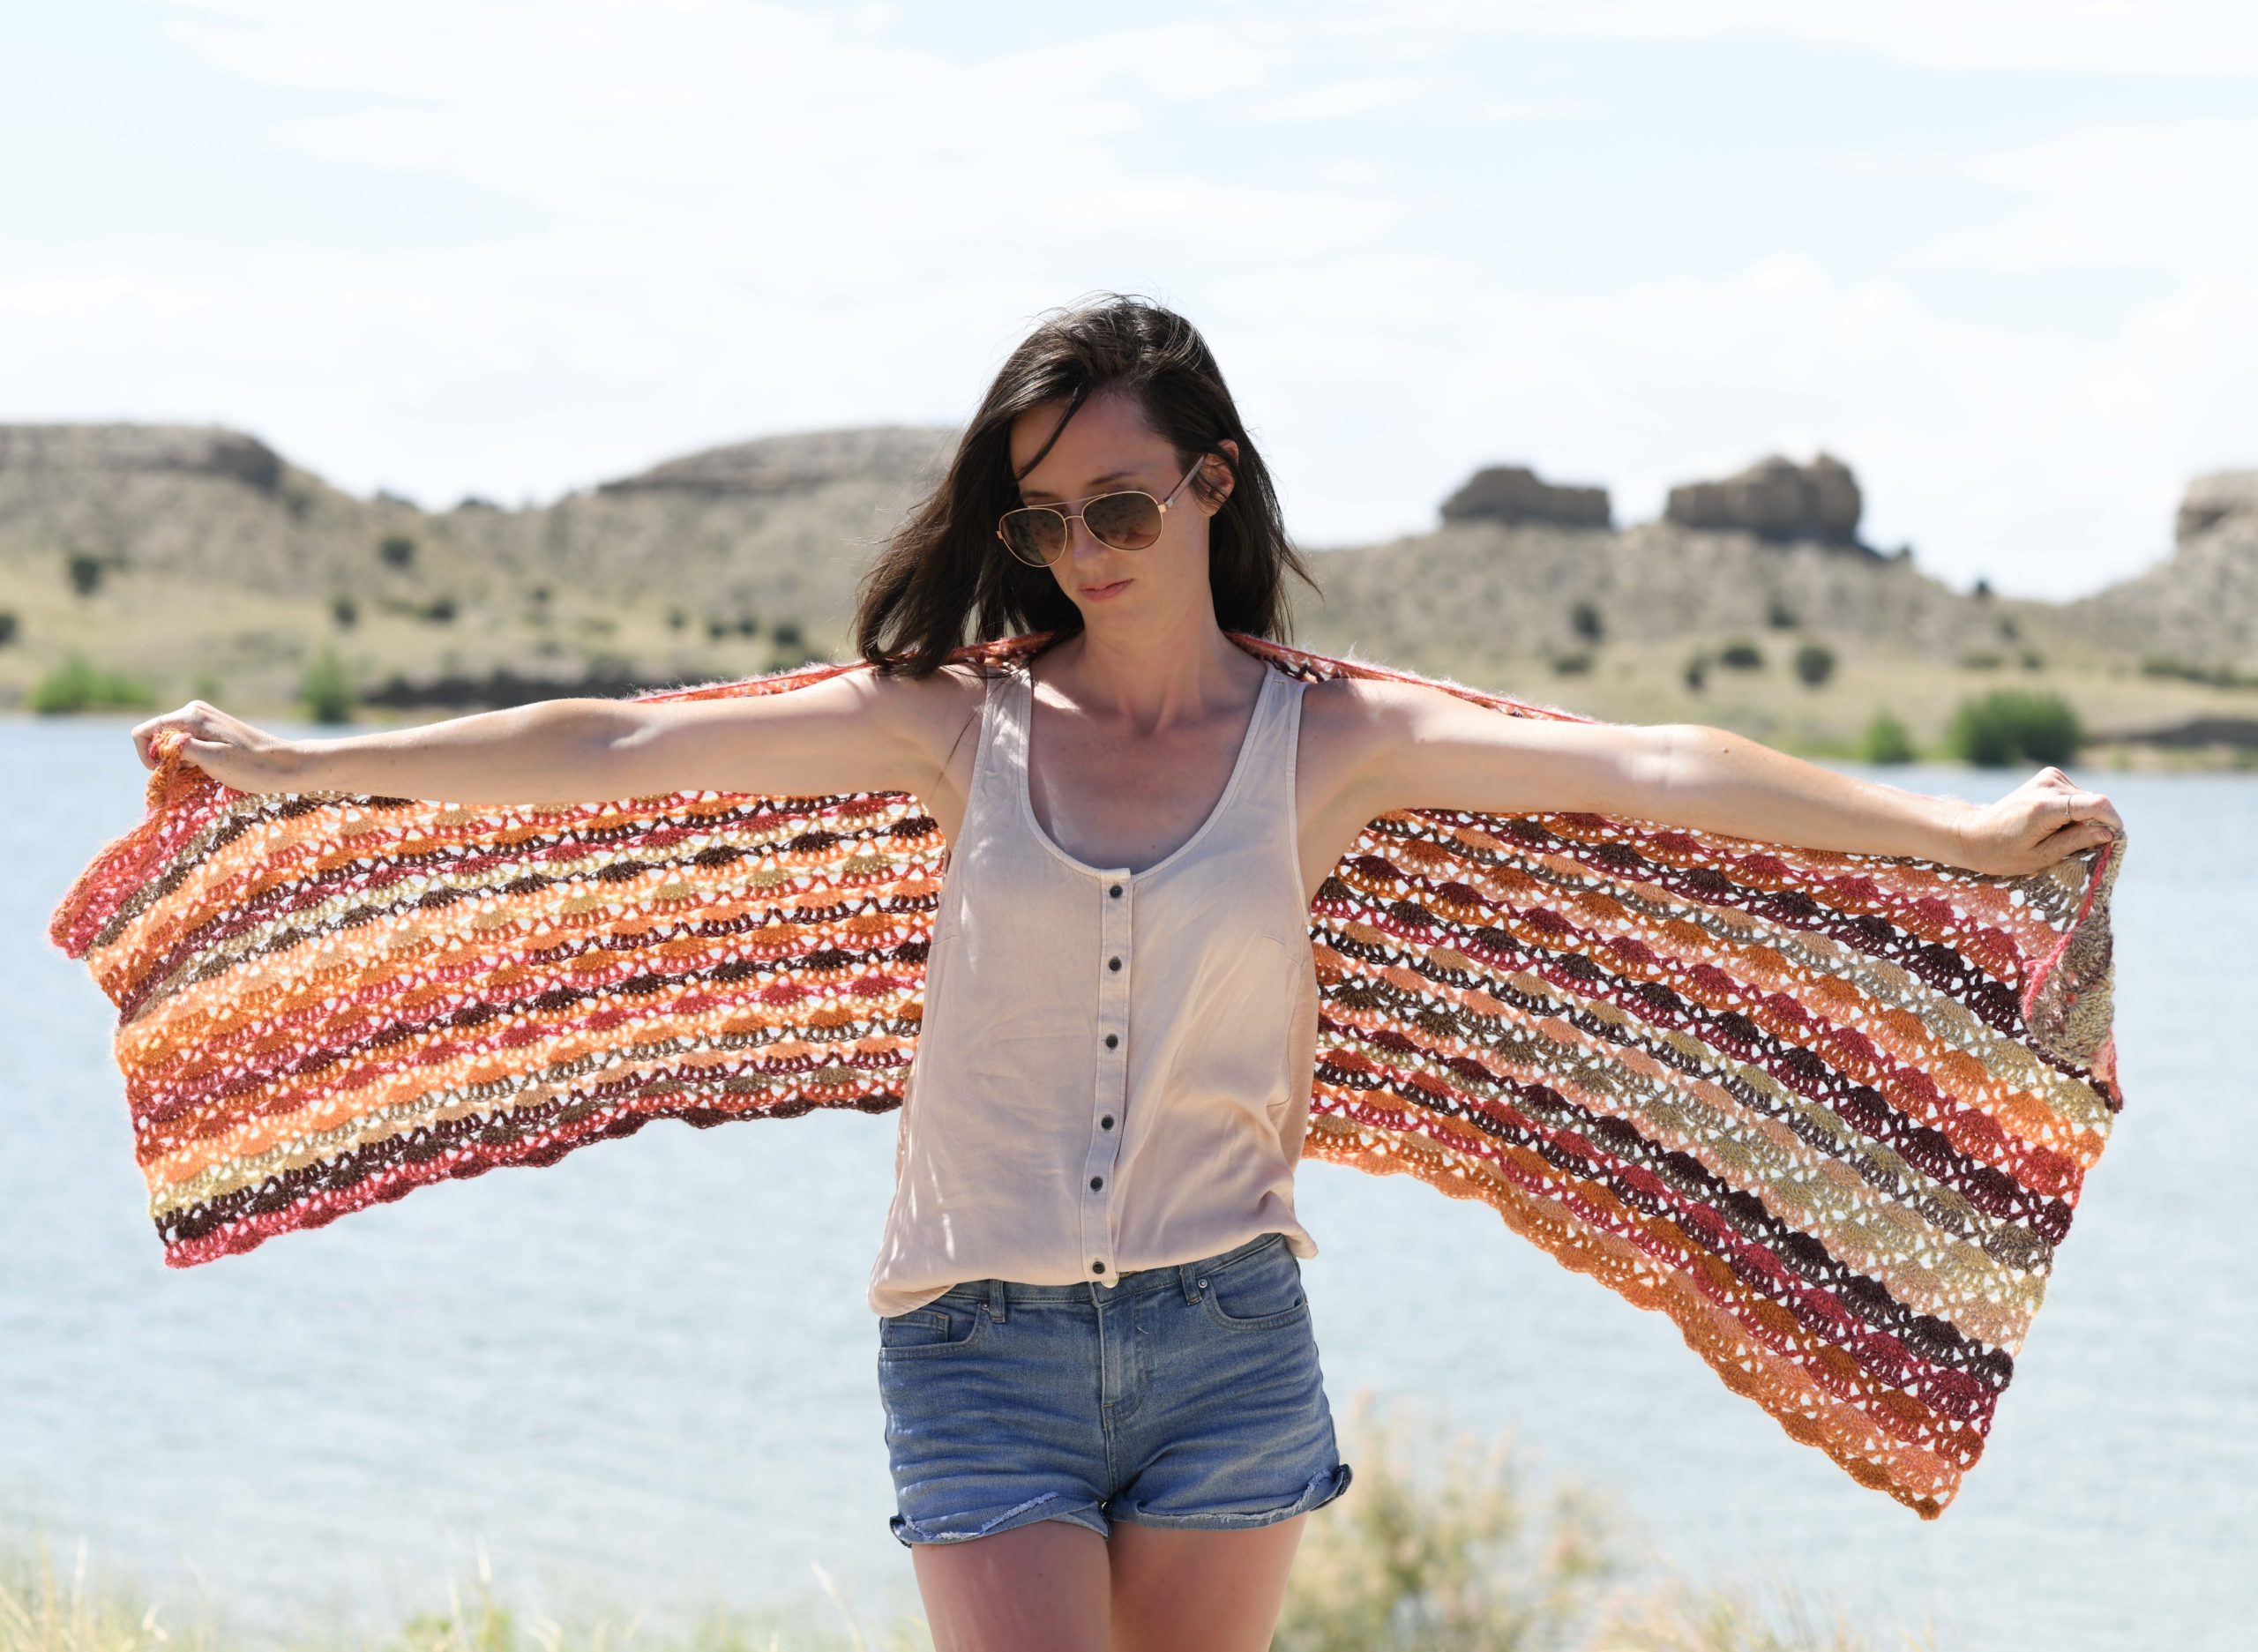 It's a Wrap. A self published shawl crochet pattern book journey